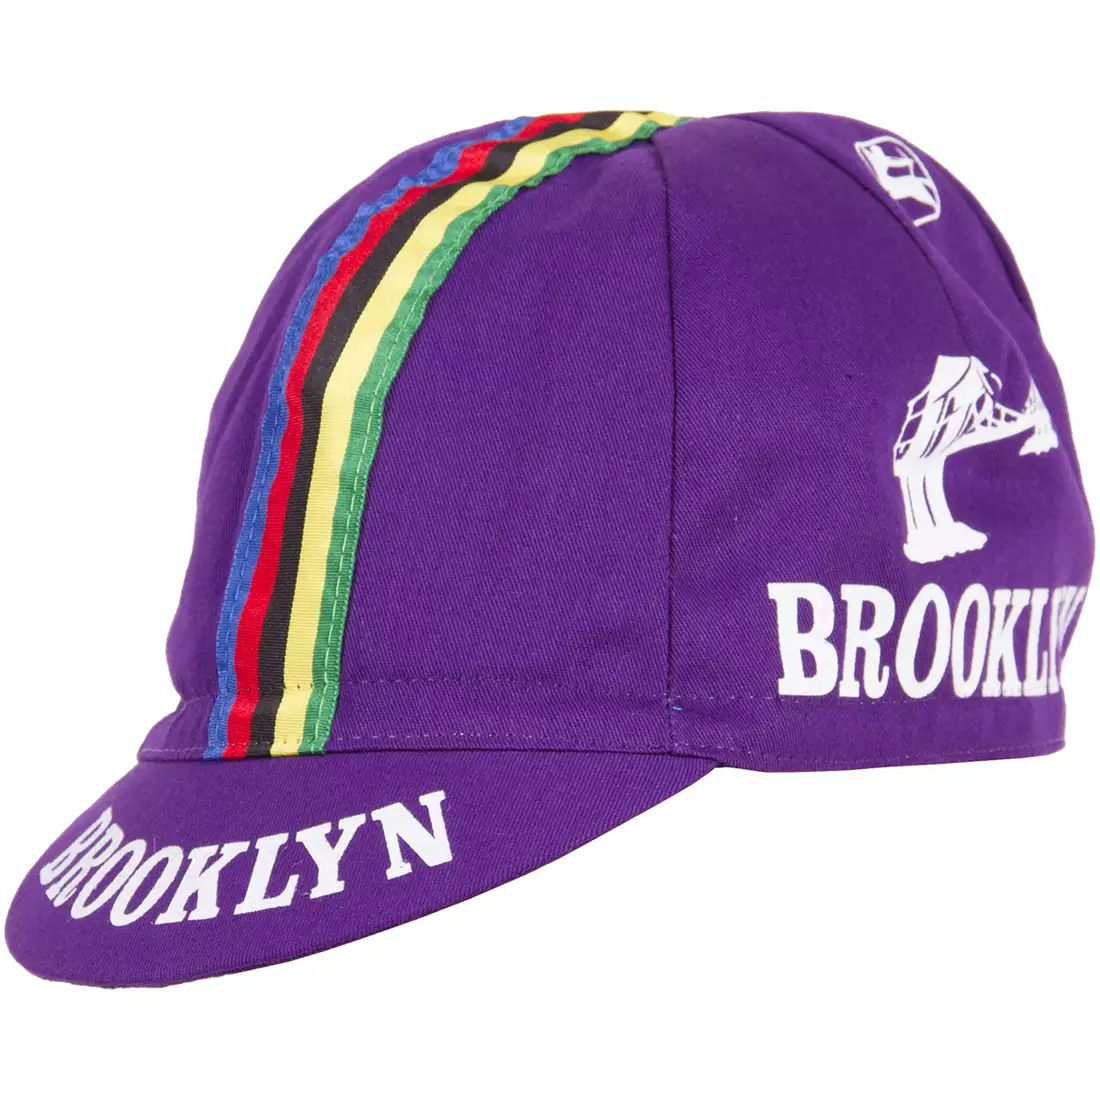 GIORDANA SS18 cycling cap - Brooklyn - Purple w/ Stripe tape GI-S6-COCA-BROK-PURP one size